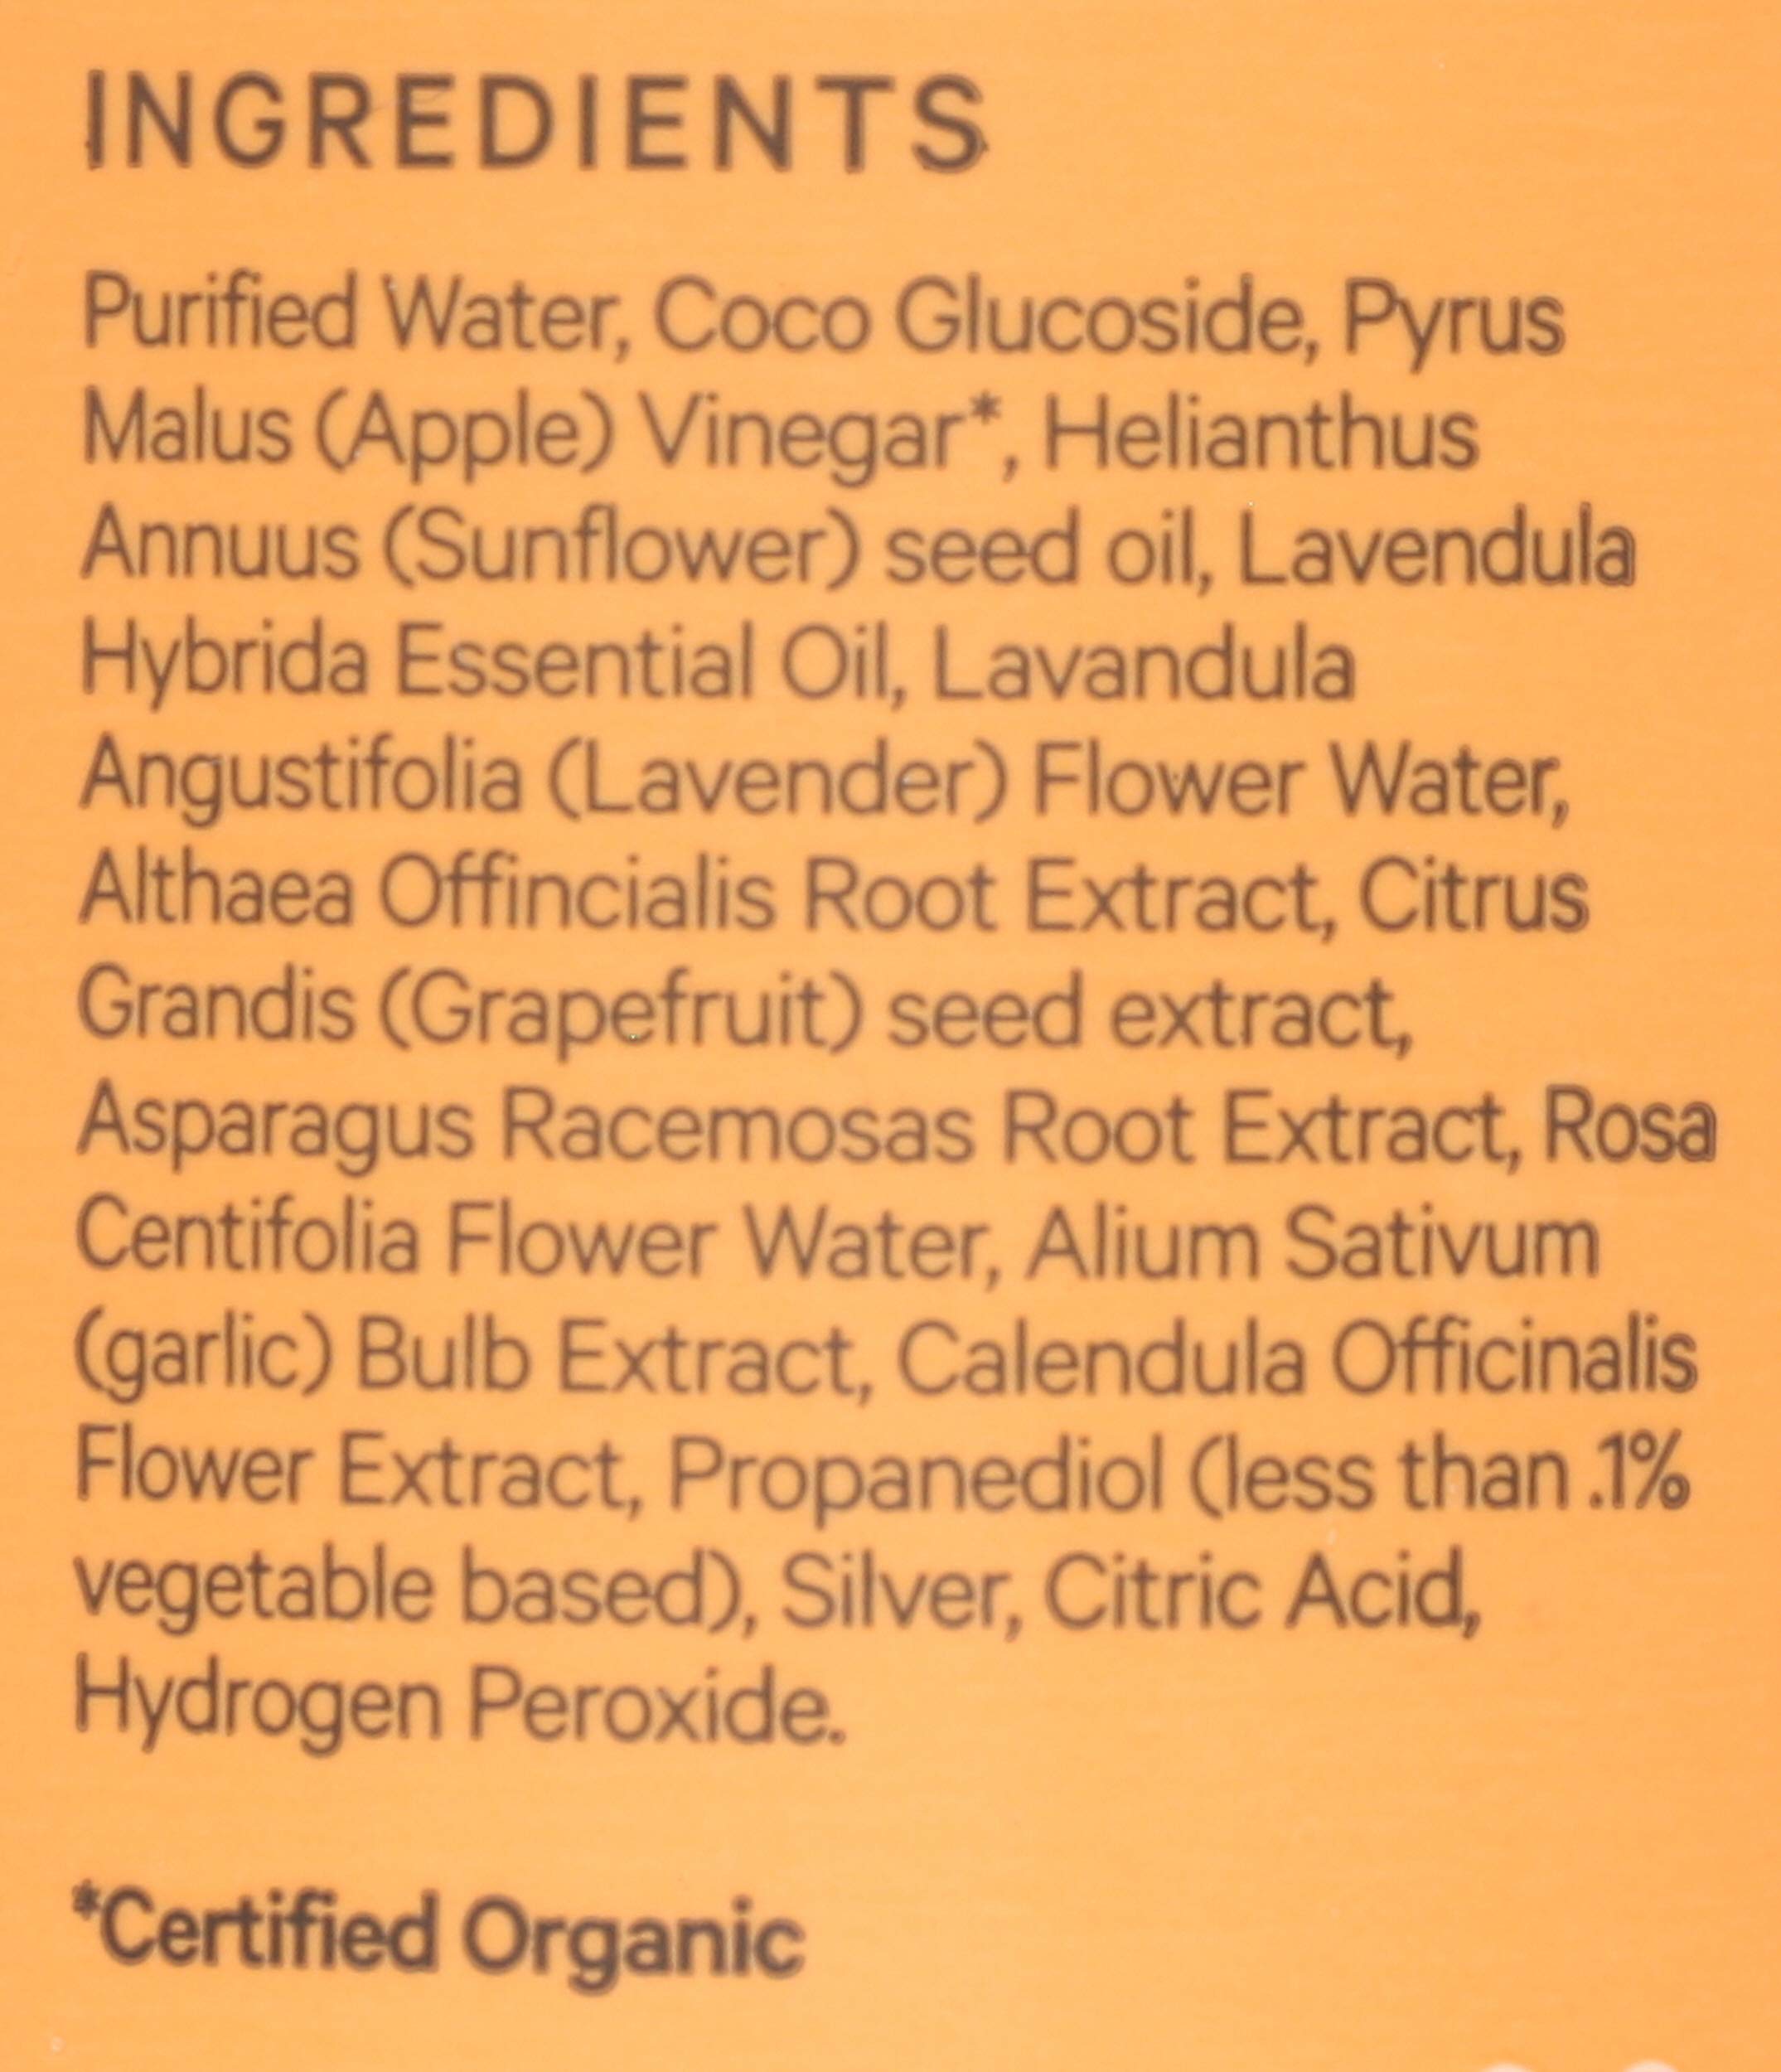 The Honey Pot | Normal Foaming Wash | Feminine Cleanse | 99% Natural | Herbal Formula | NO Artificial Fragrance - Parabens - Carcinogens - Sulfates - Dioxides | 5.5 Fl Oz